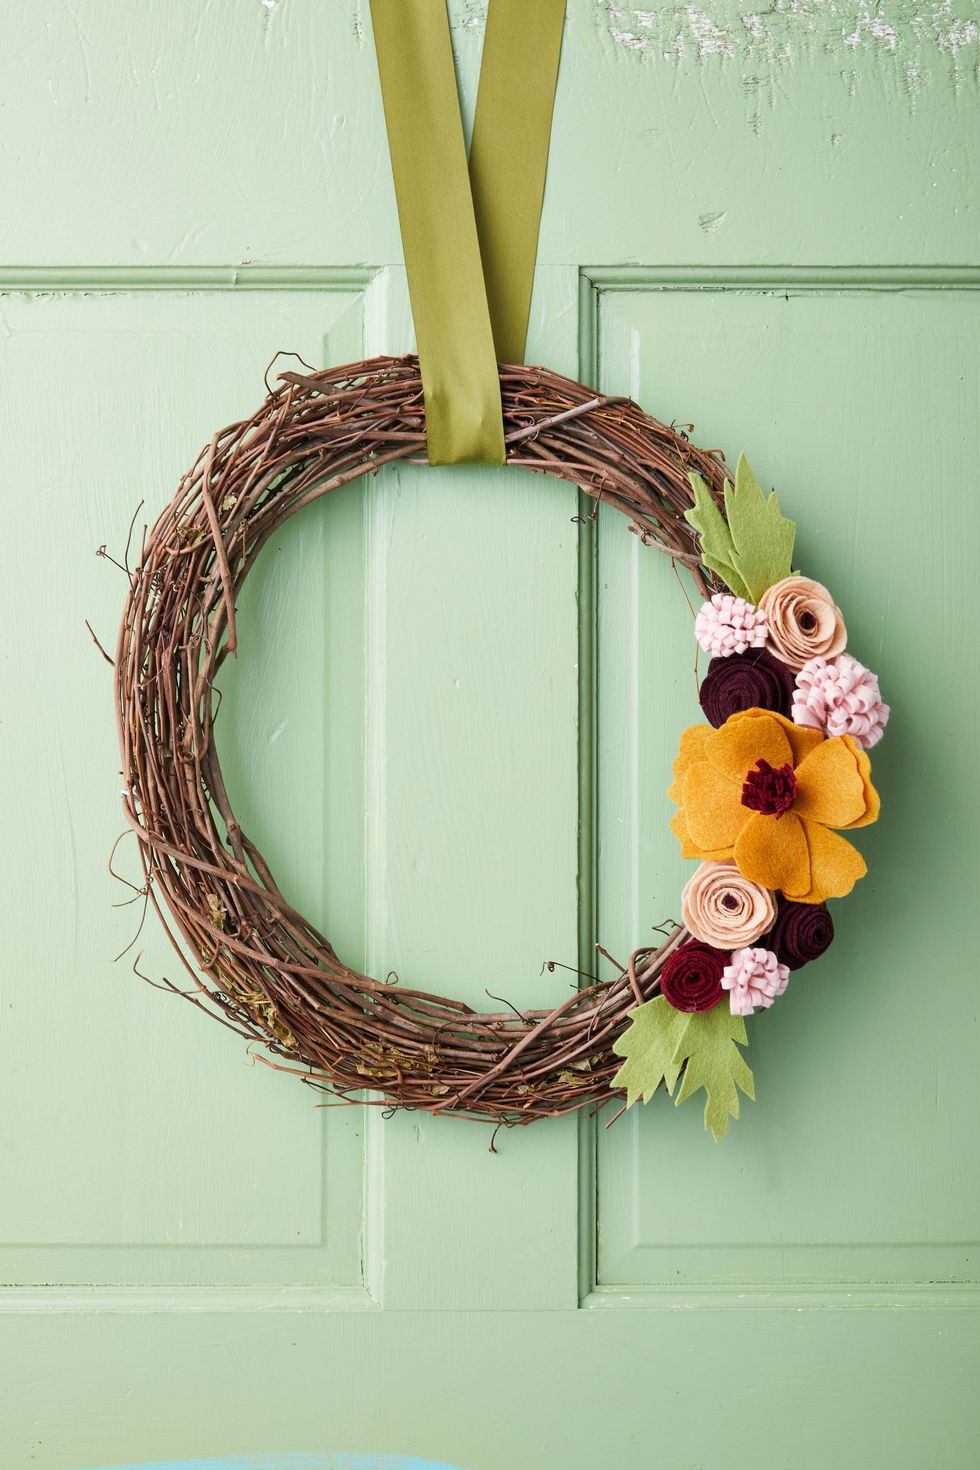 felt flowers on a grapevine wreath form hung on a green door